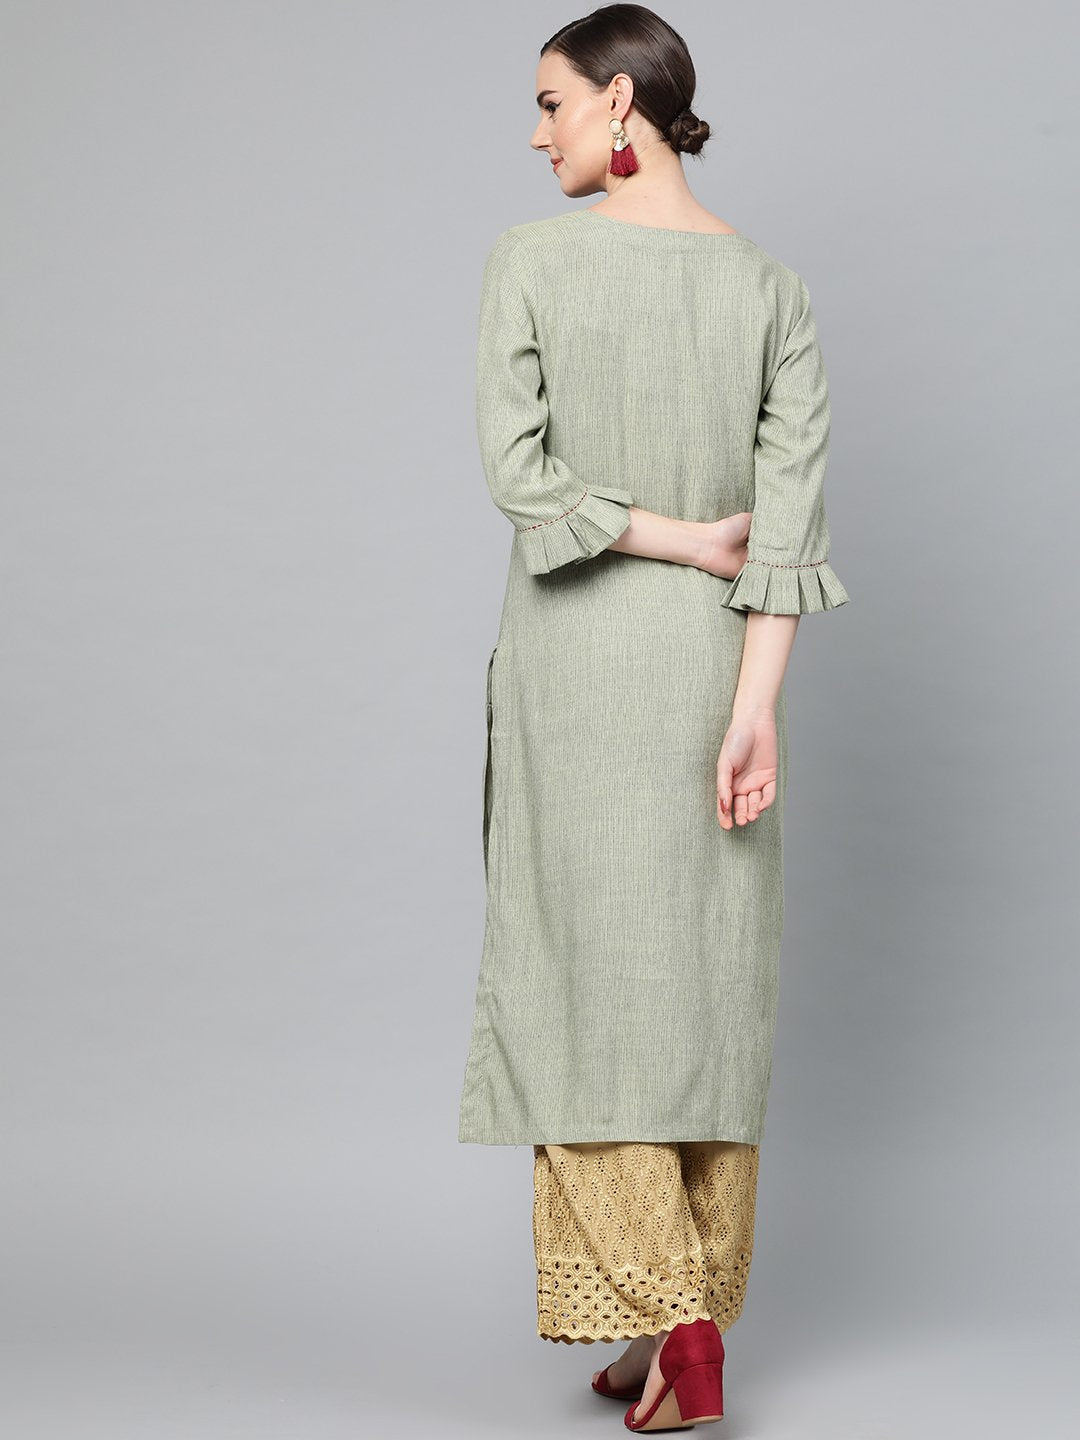 Ishin Women's Rayon Green & Beige Embroidered A-Line Kurta Palazzo Set